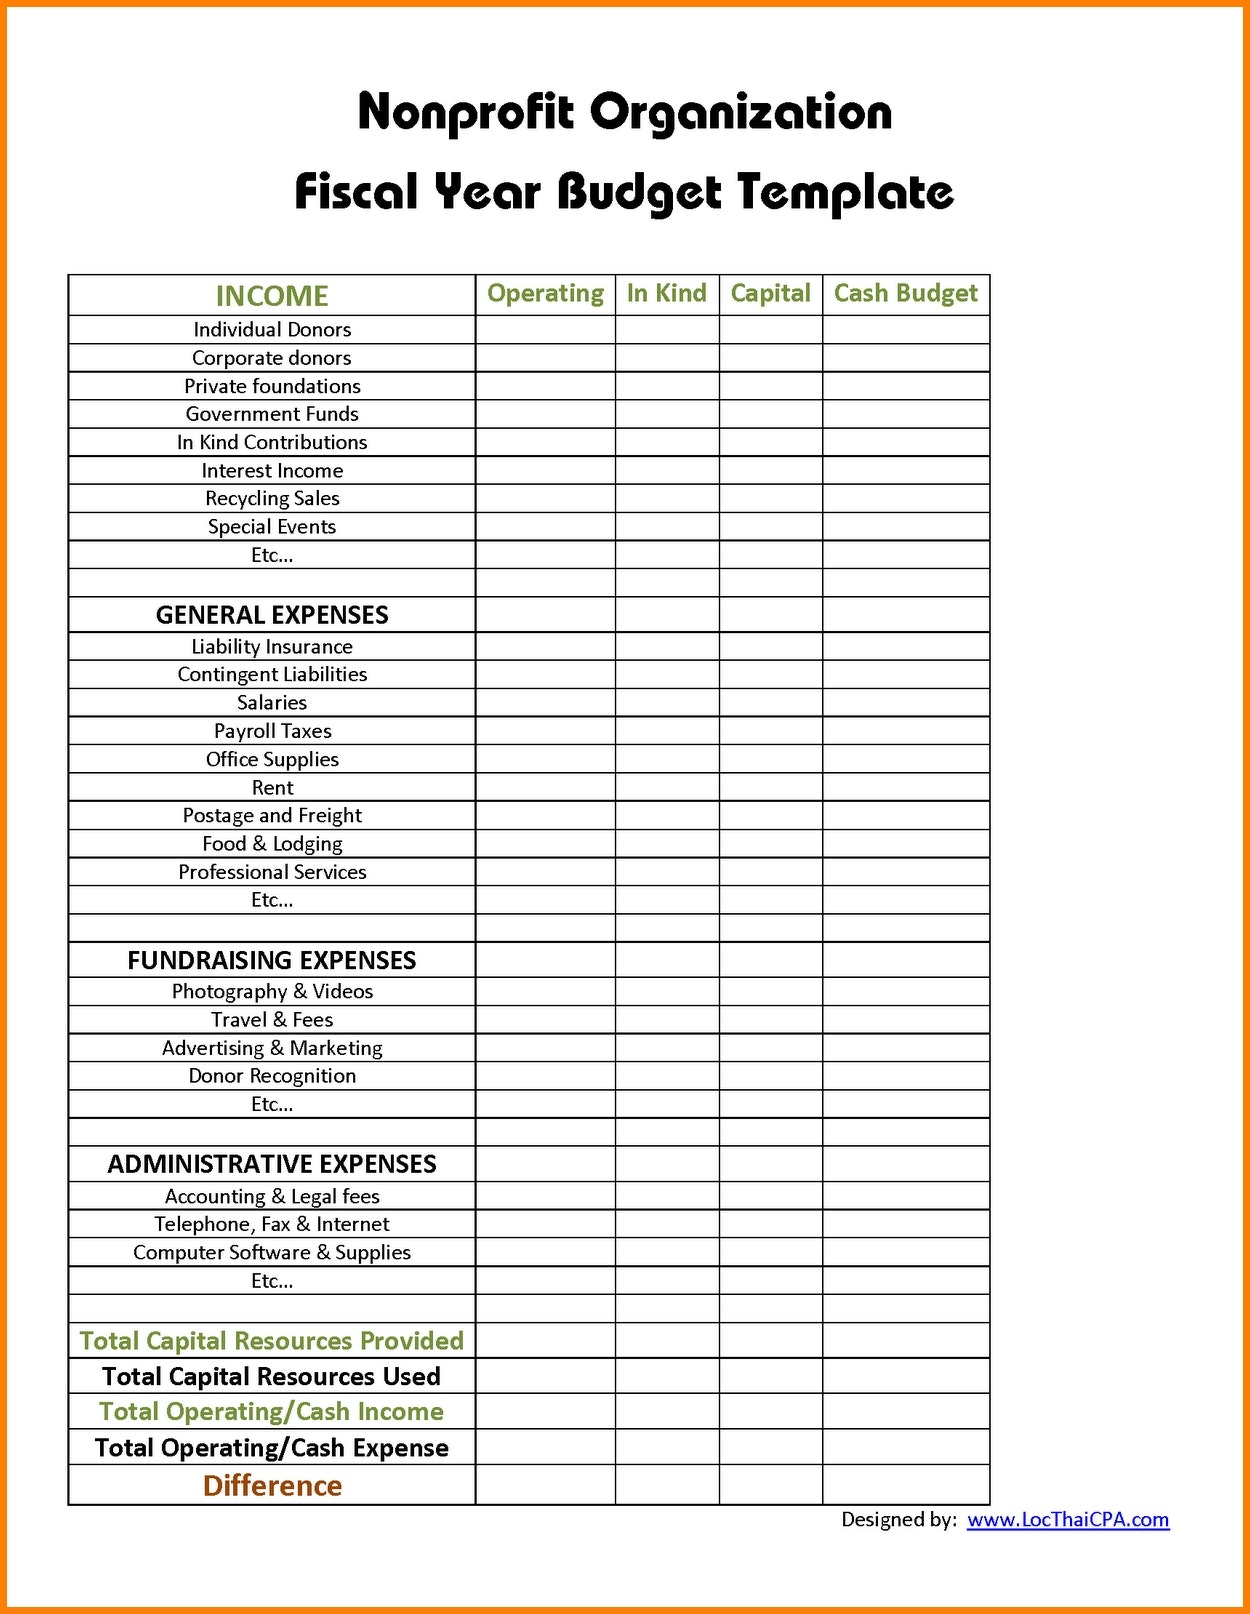 Nonprofit budget template issue see 9 non profit regarding 